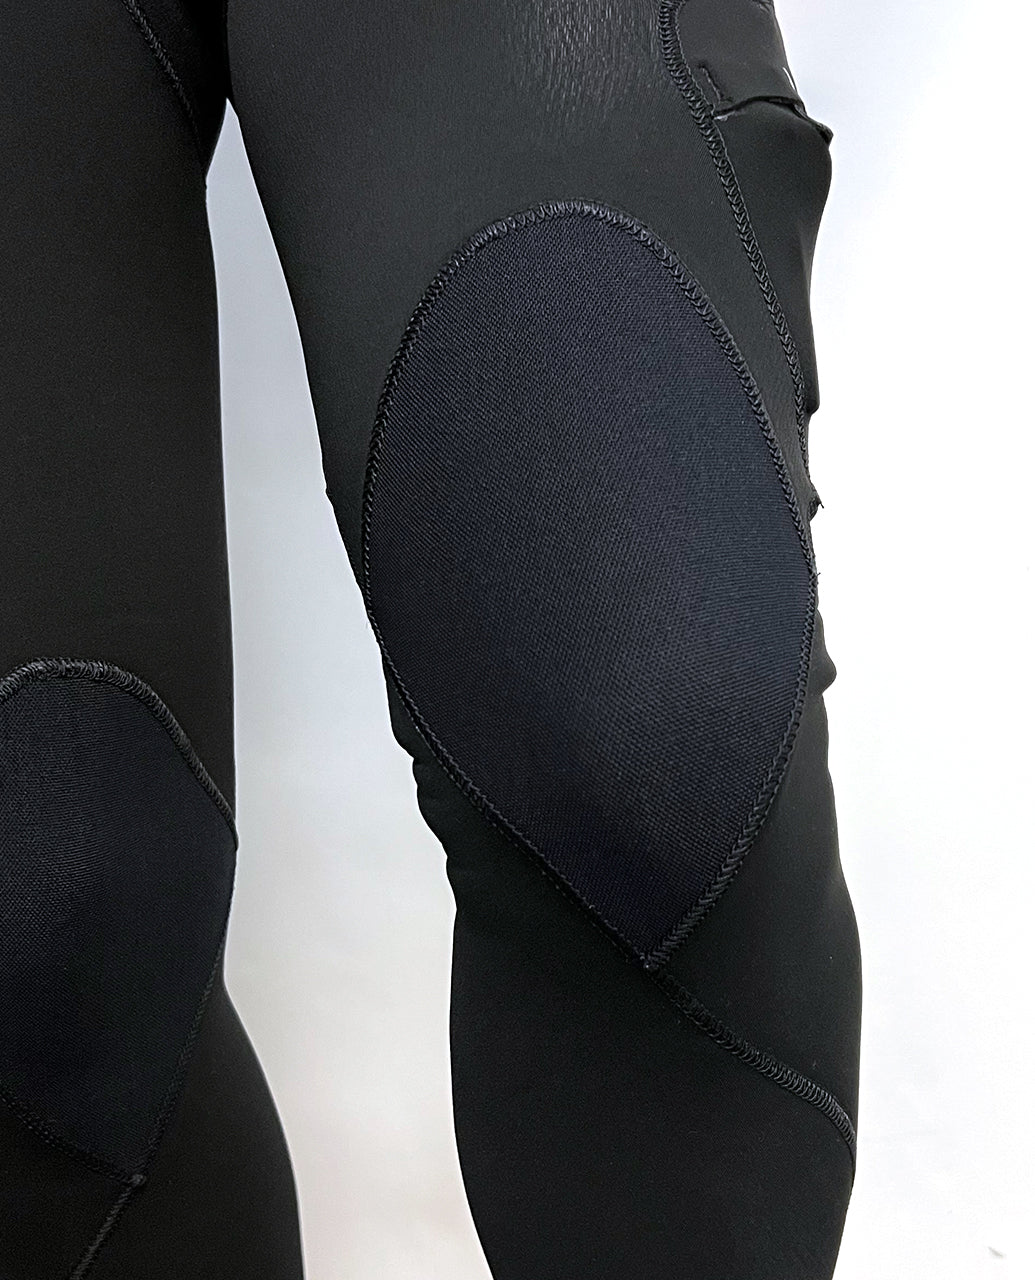 [SALE] [Spring/Autumn] Men's E BOMB 3/2mm Zip Free Full Suit Wetsuit